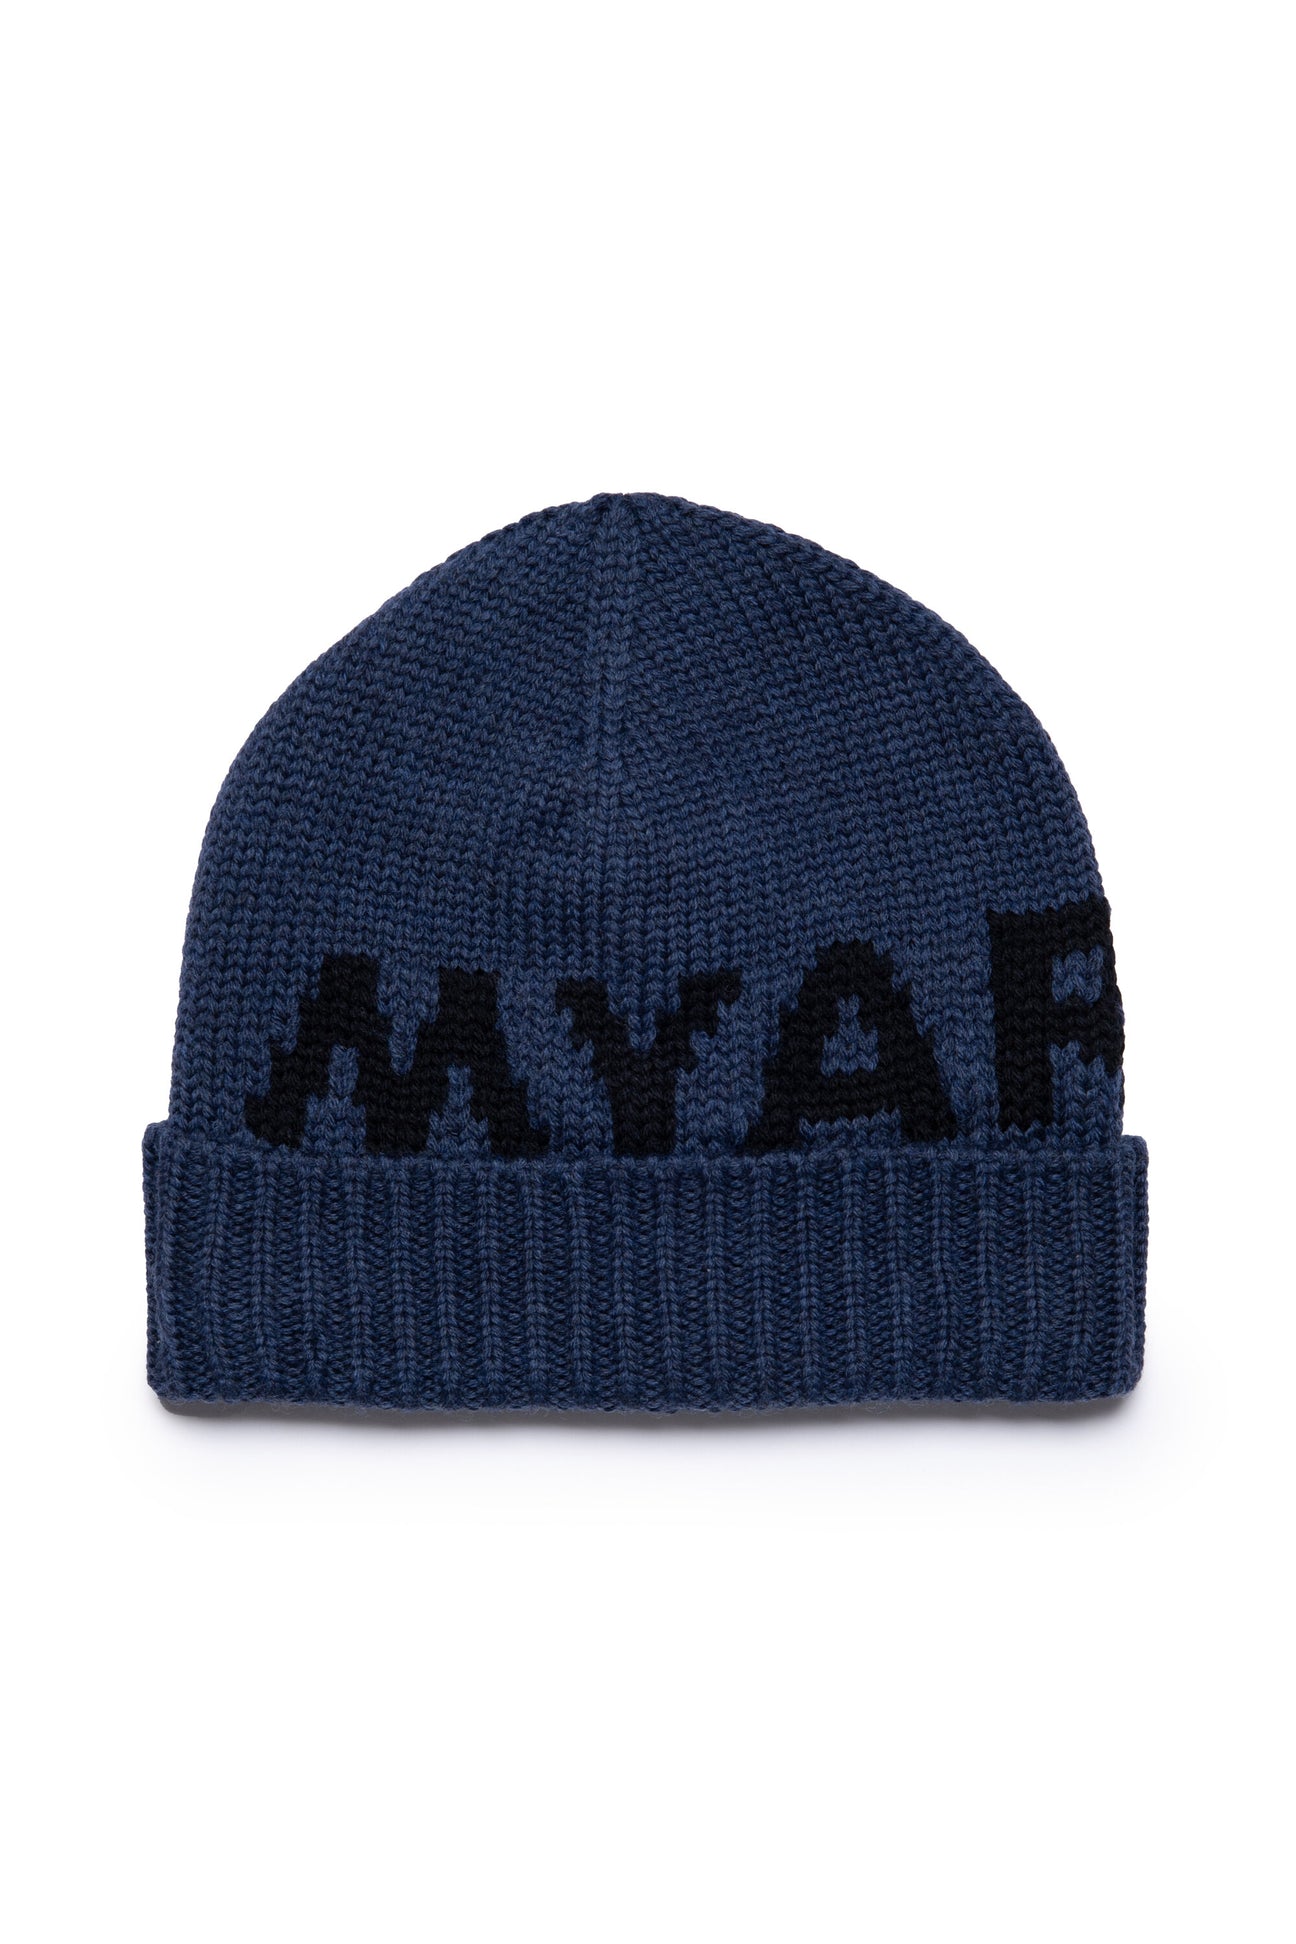 Beanie hat with MYAR logo 